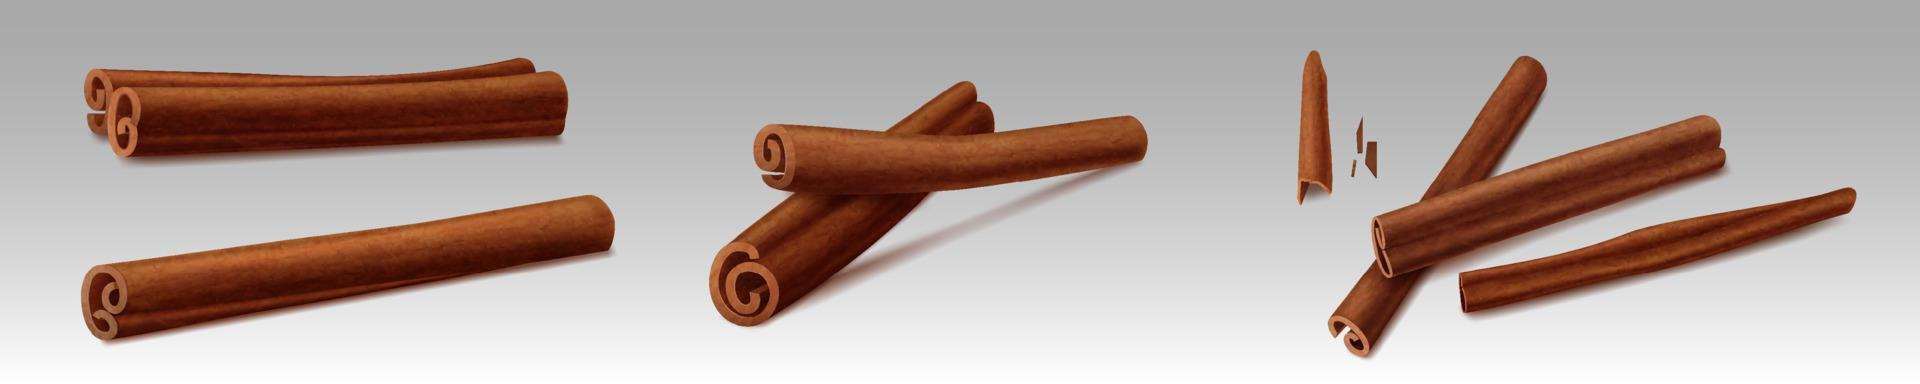 Cinnamon sticks, brown indian spices vector